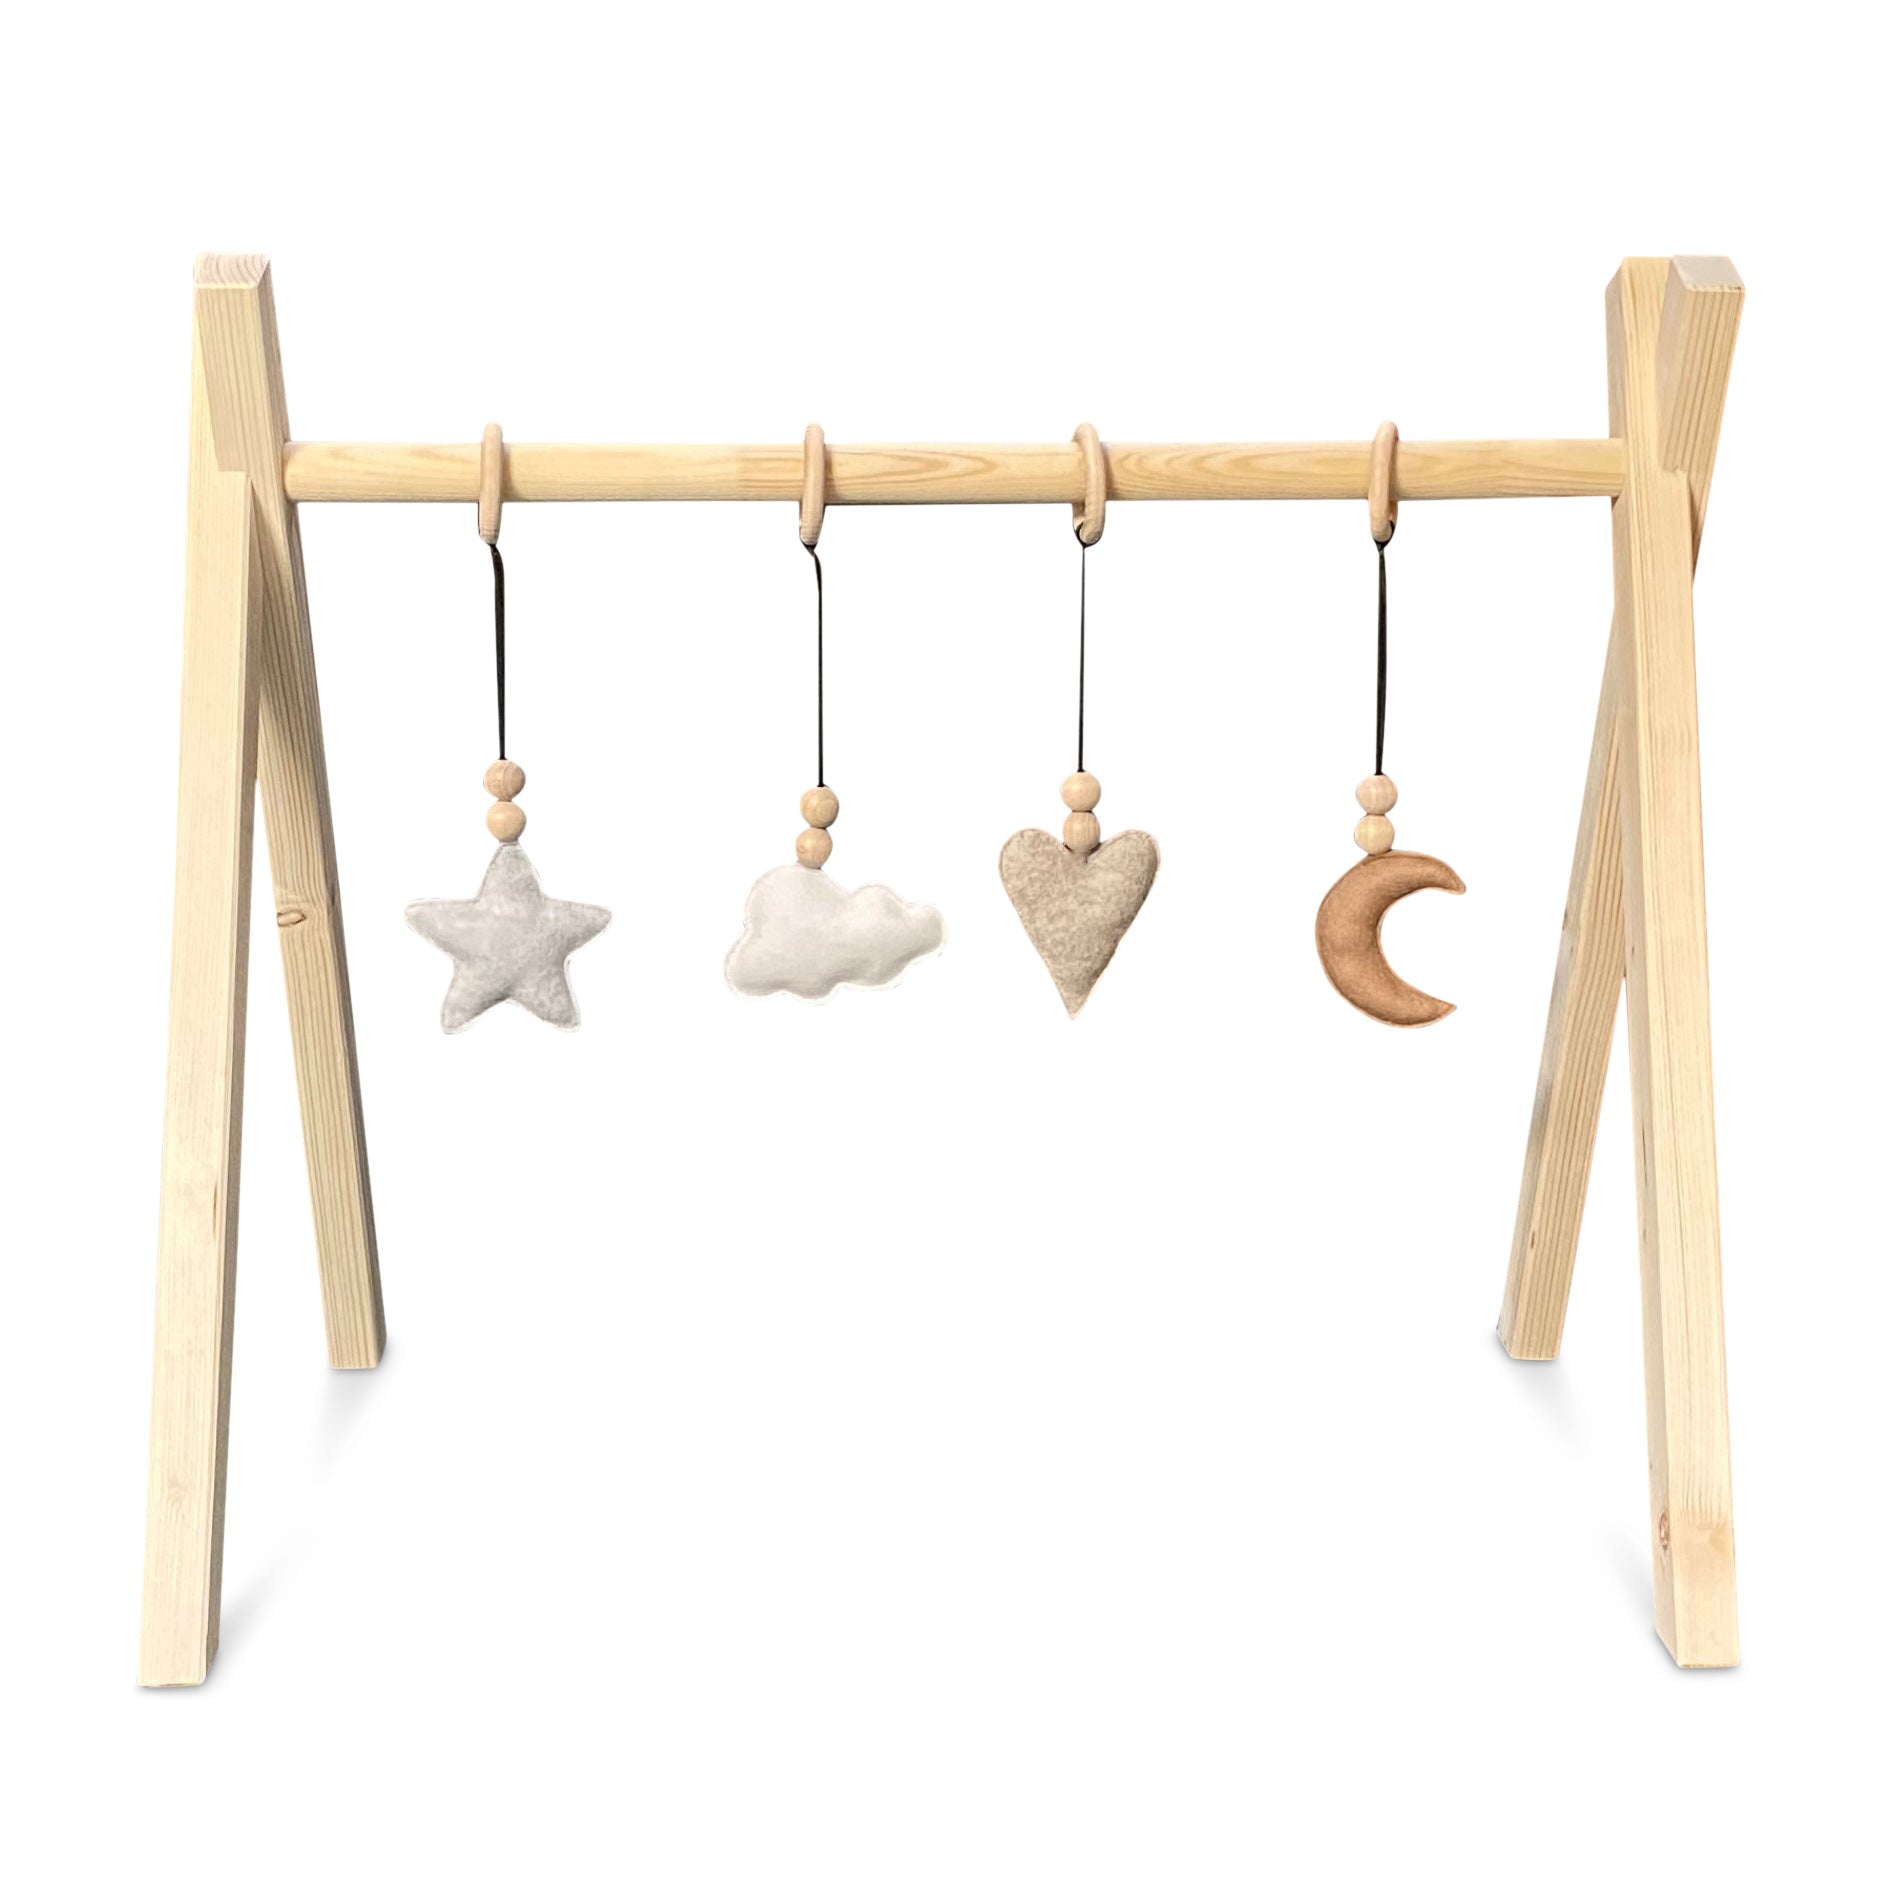 Gimnasio para bebés de madera, sin perchas (se vende por separado)